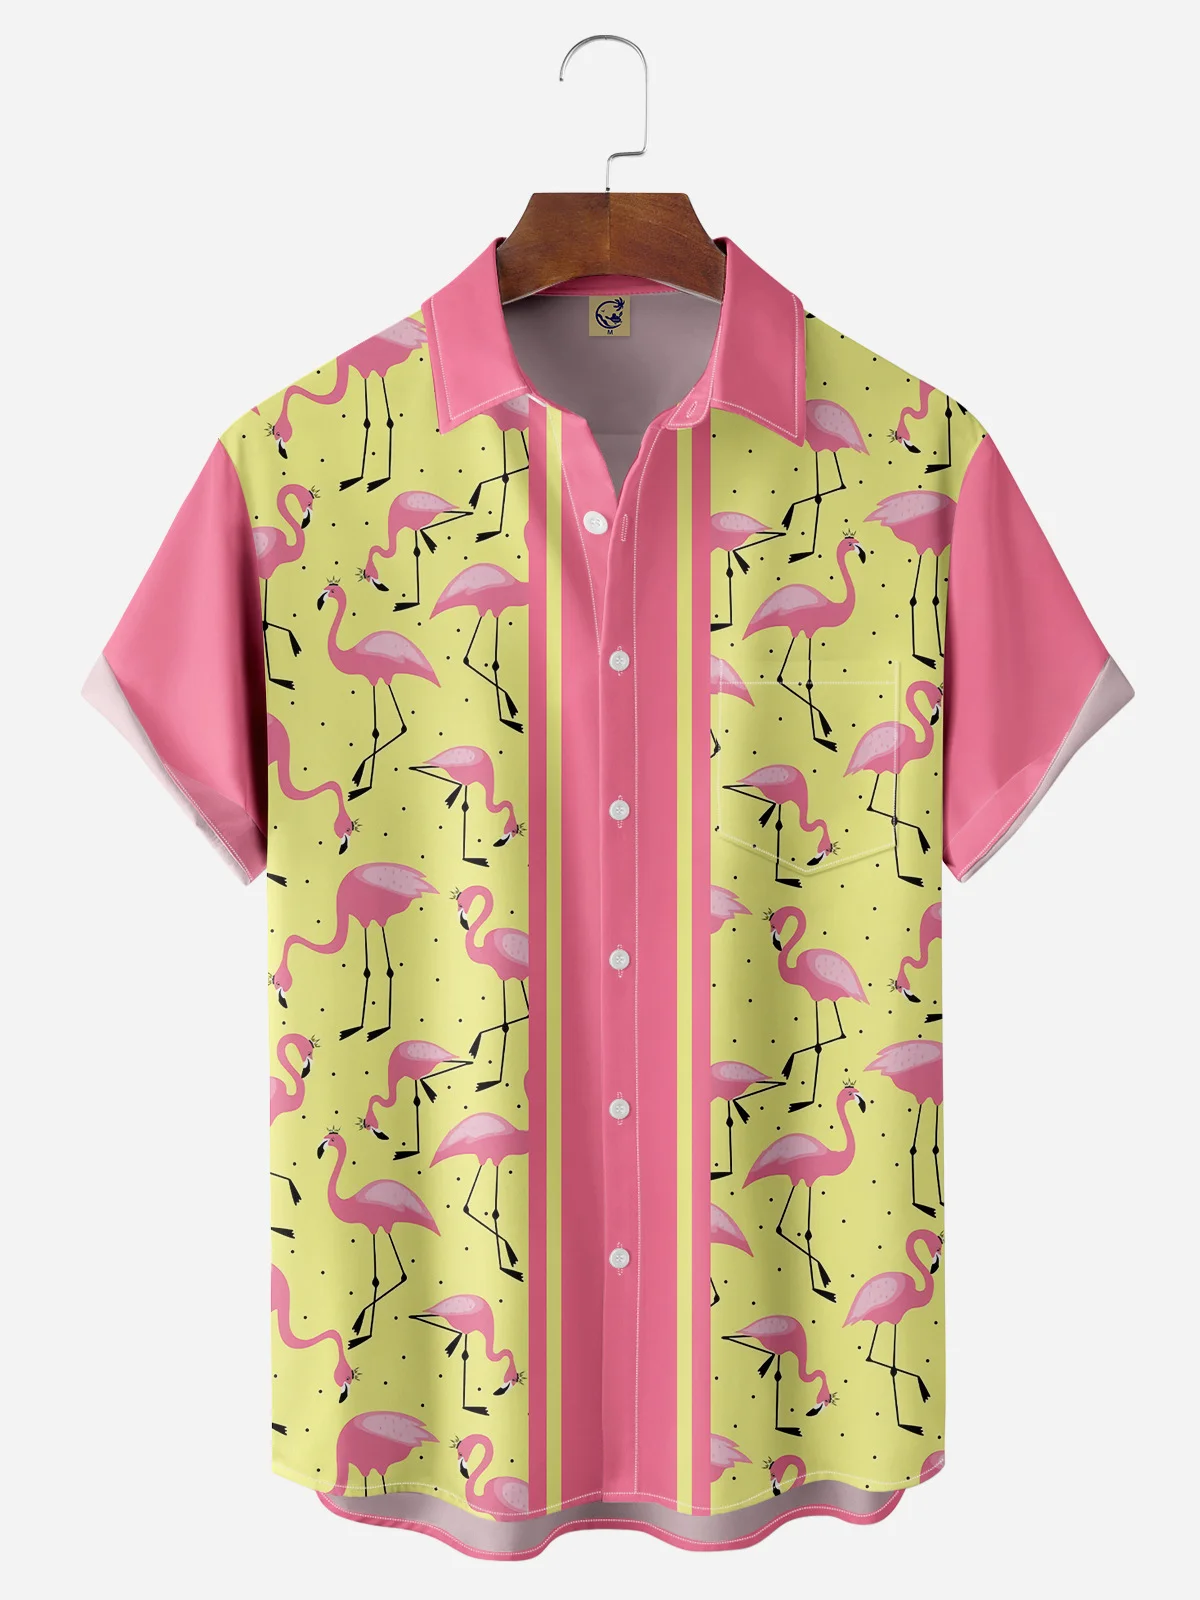 Hardaddy Flamingo Chest Pocket Short Sleeve Bowling Shirt | hardaddy